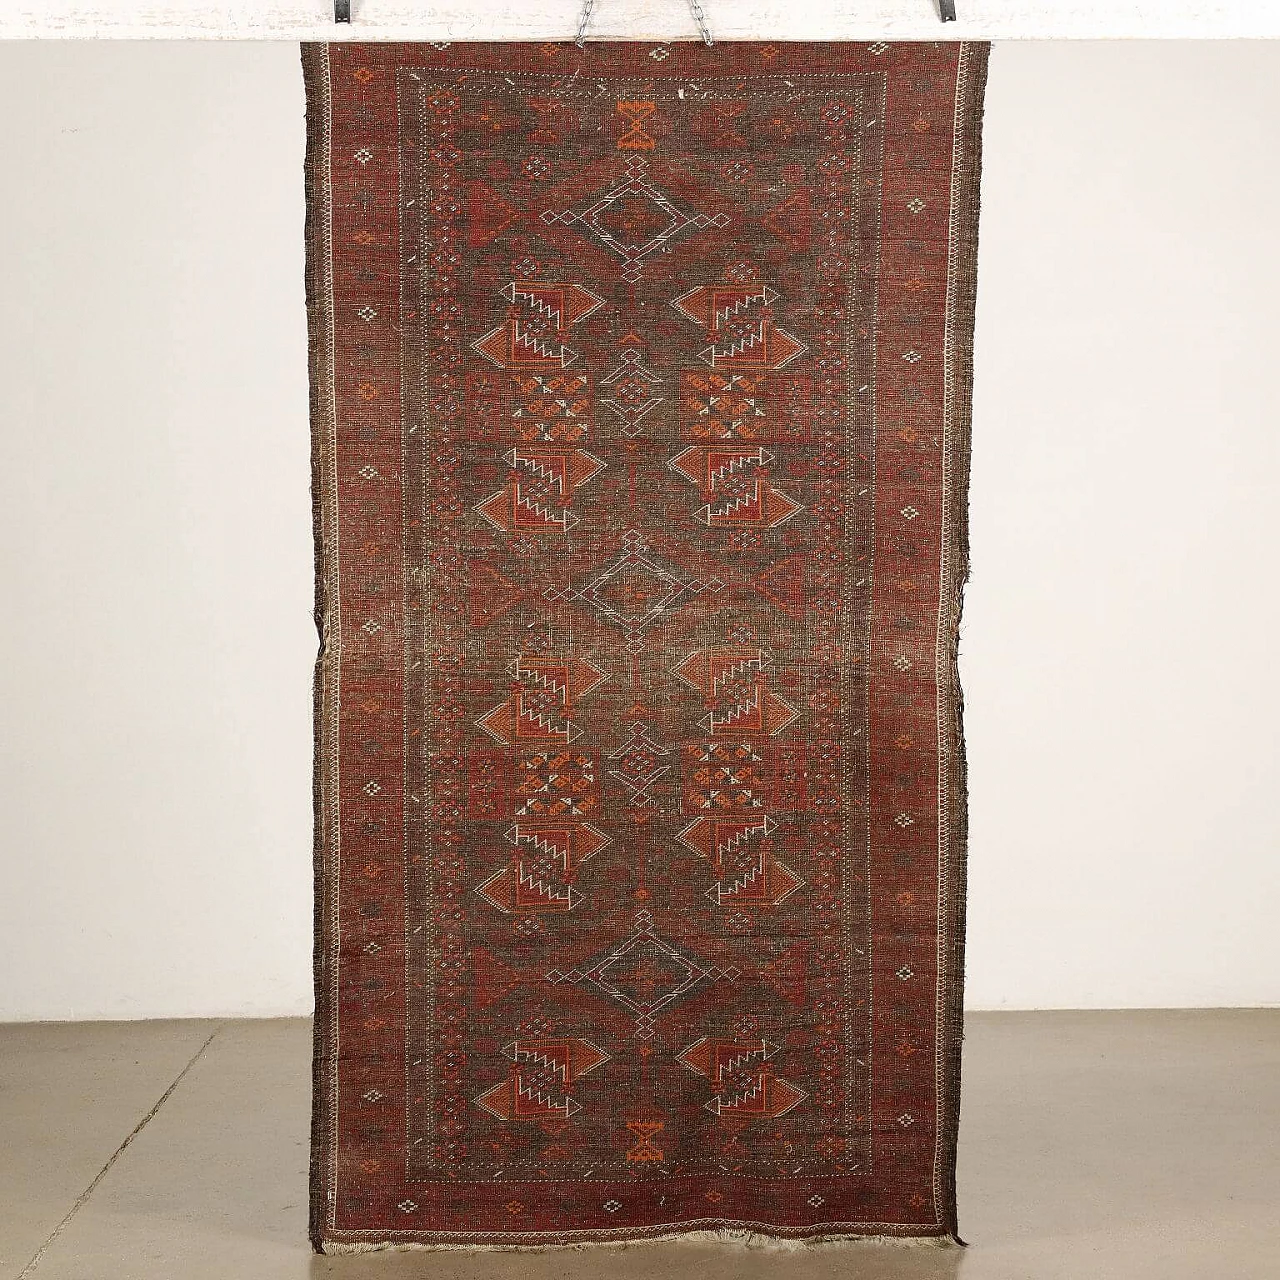 Iranian red, blue and orange wool Beluchi rug 7